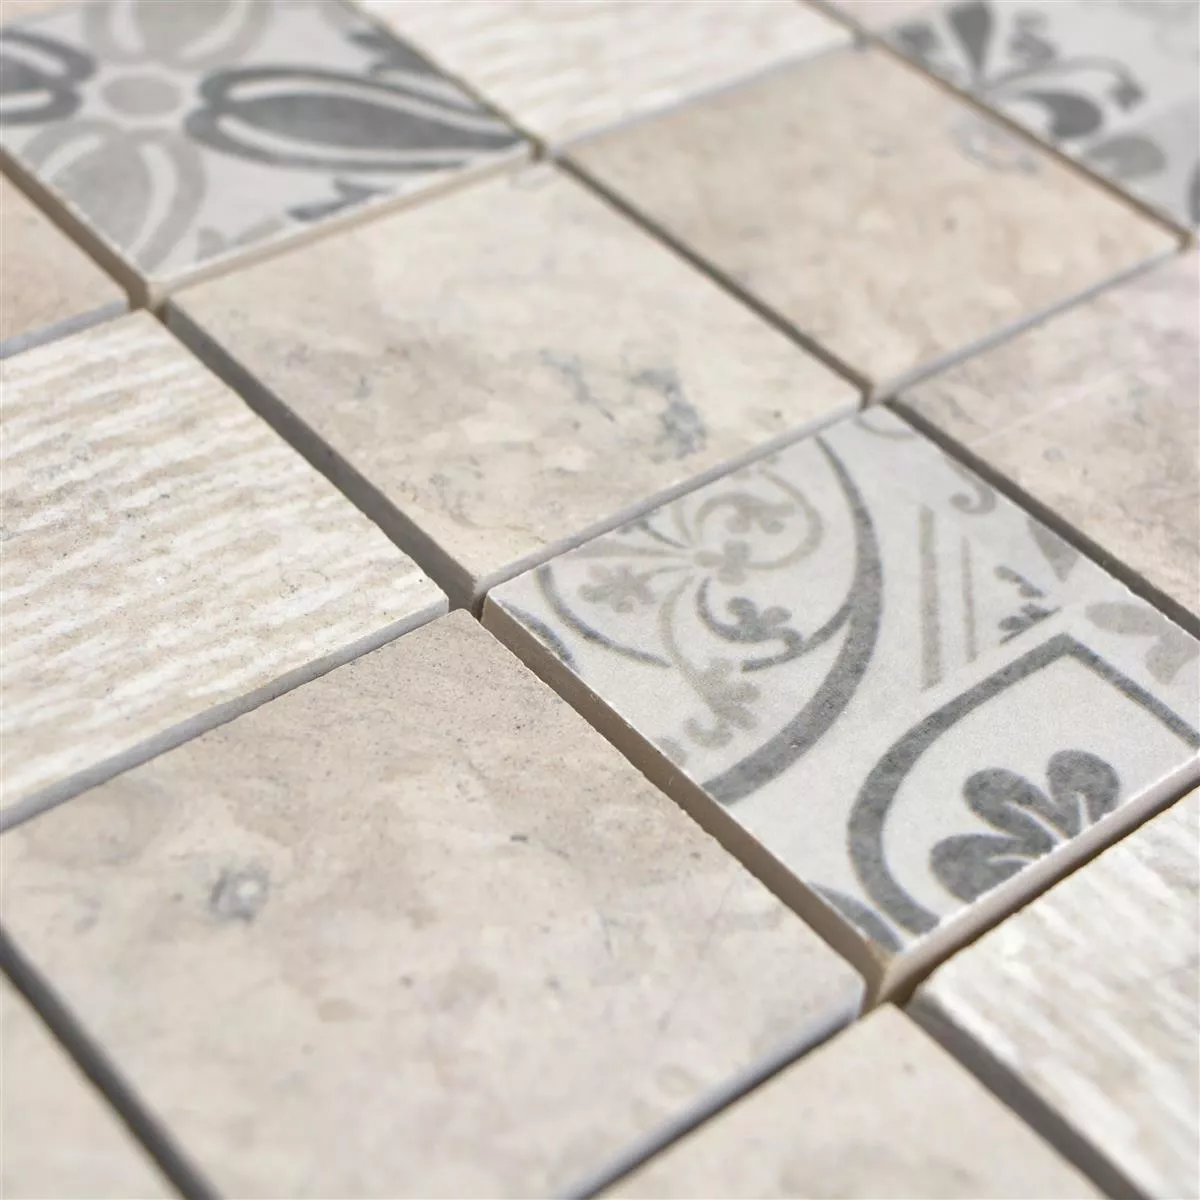 Sample Ceramic Mosaic Tiles Mythos Square Grey Beige